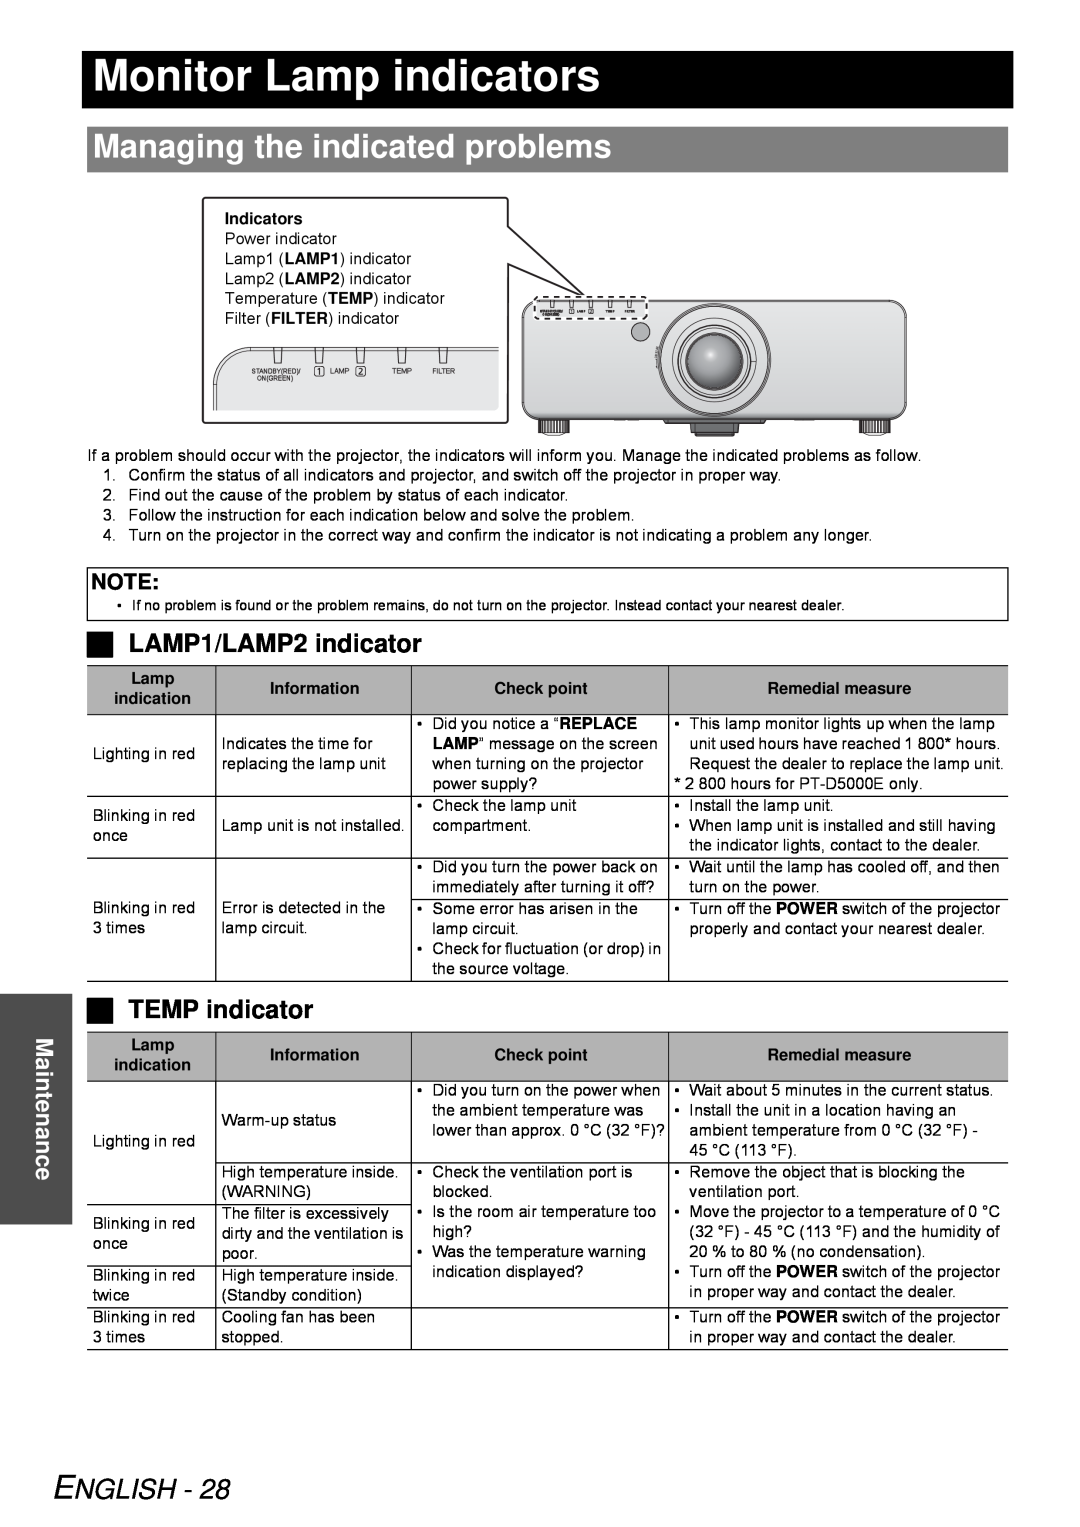 Panasonic PT-DZ6710E Monitor Lamp indicators, Managing the indicated problems,  LAMP1/LAMP2 indicator,  TEMP indicator 